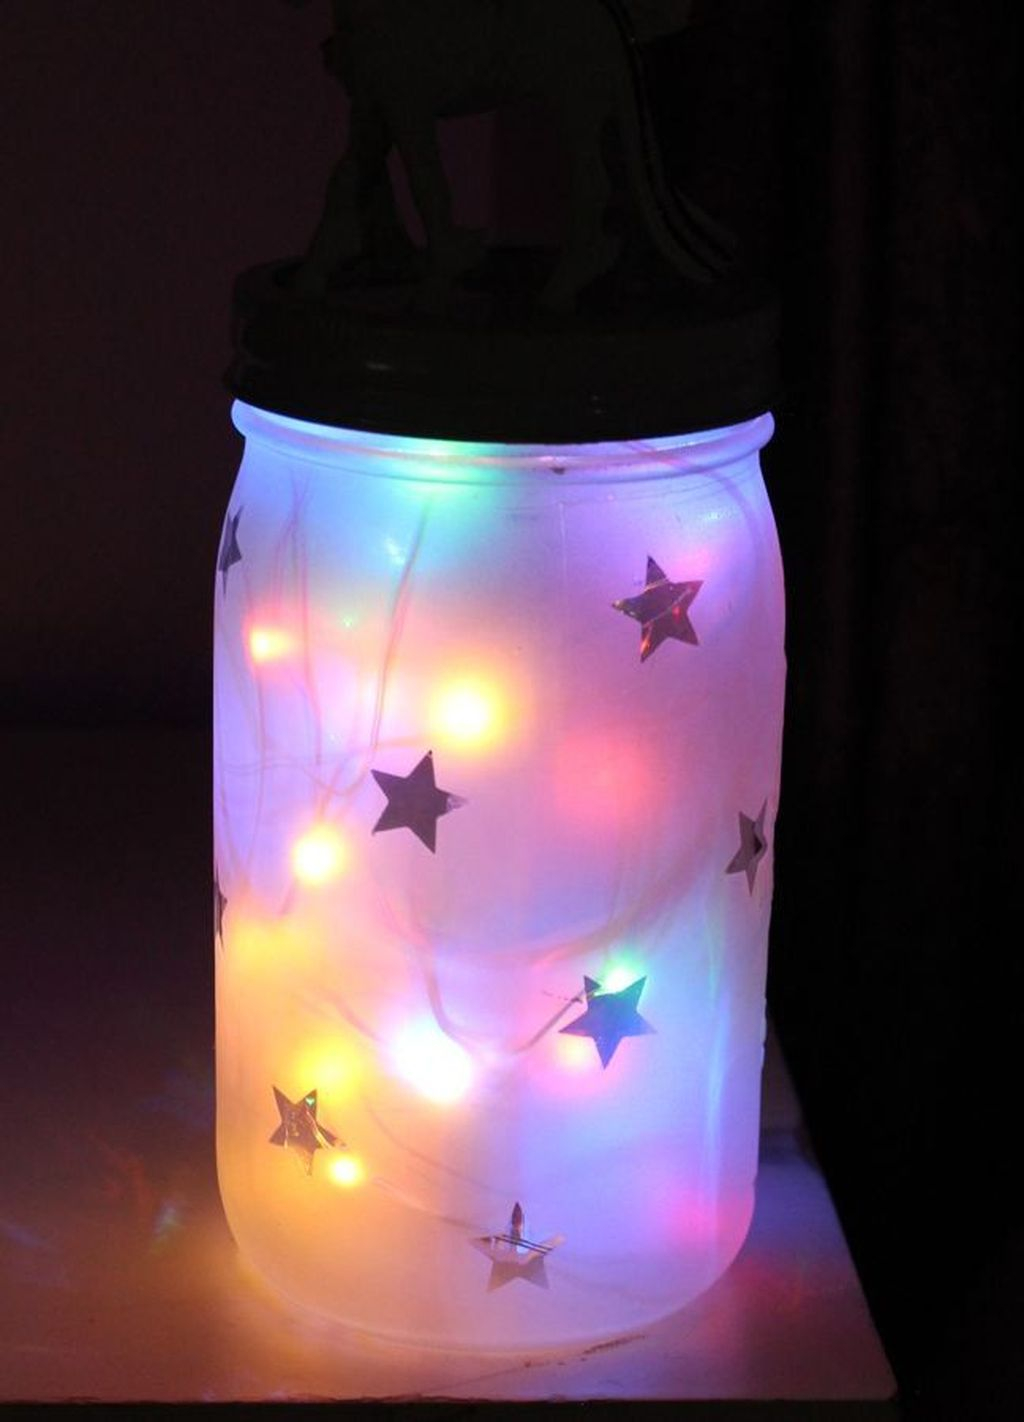 Awesome Diy Mason Jar Lights To Make Your Home Look Beautiful36